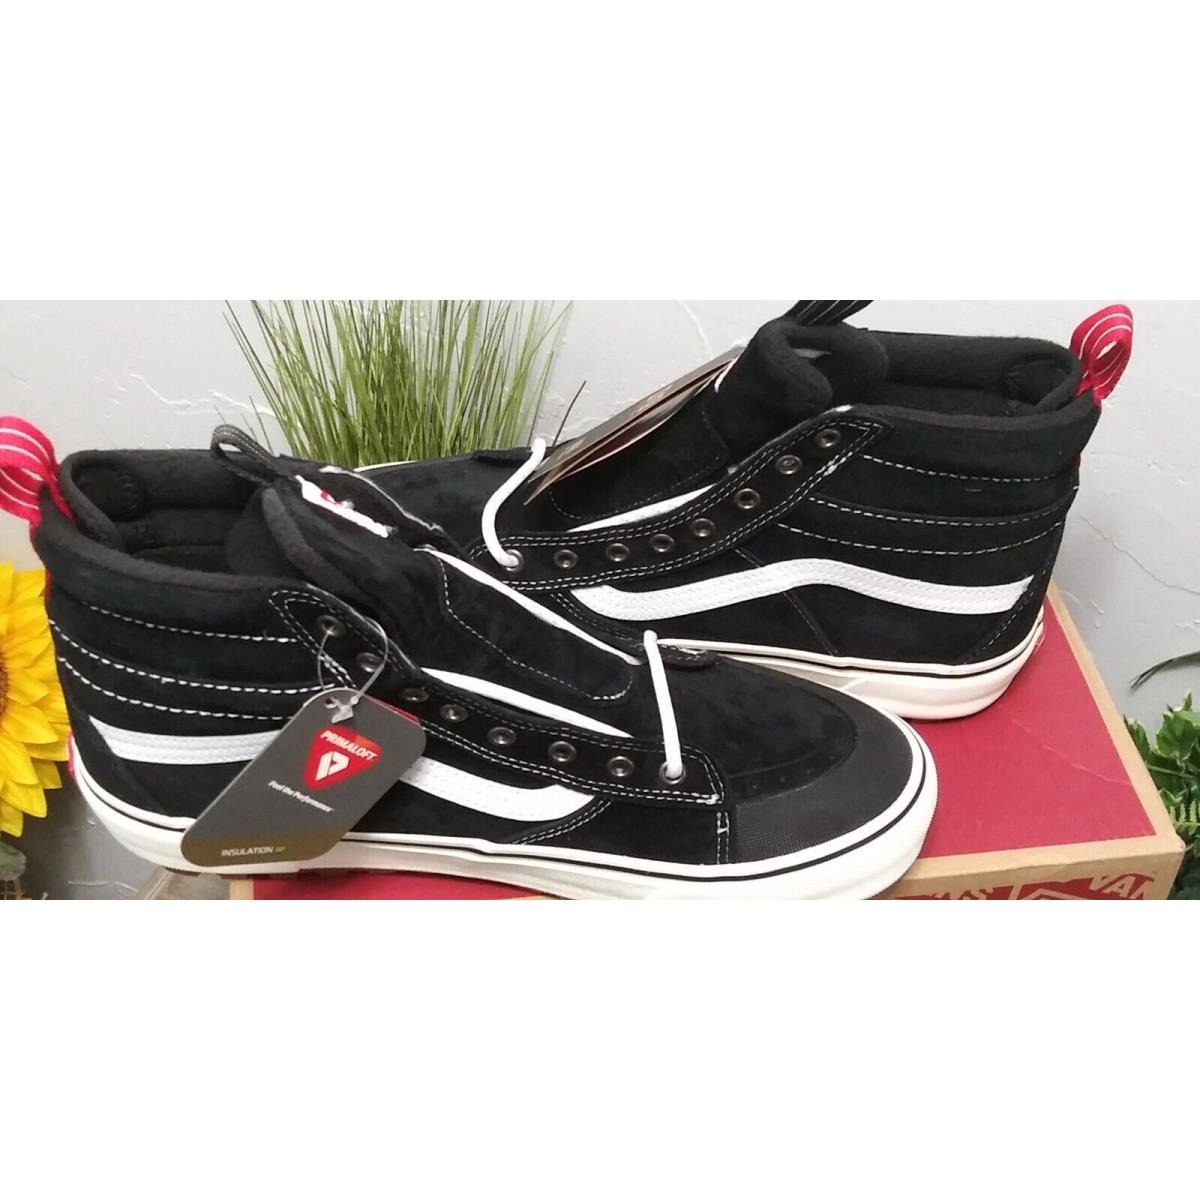 Vans Sk8-Hi MTE-2 Mens Size 11.5 Black White Red All Terrain Hi Top Sneaker Boot